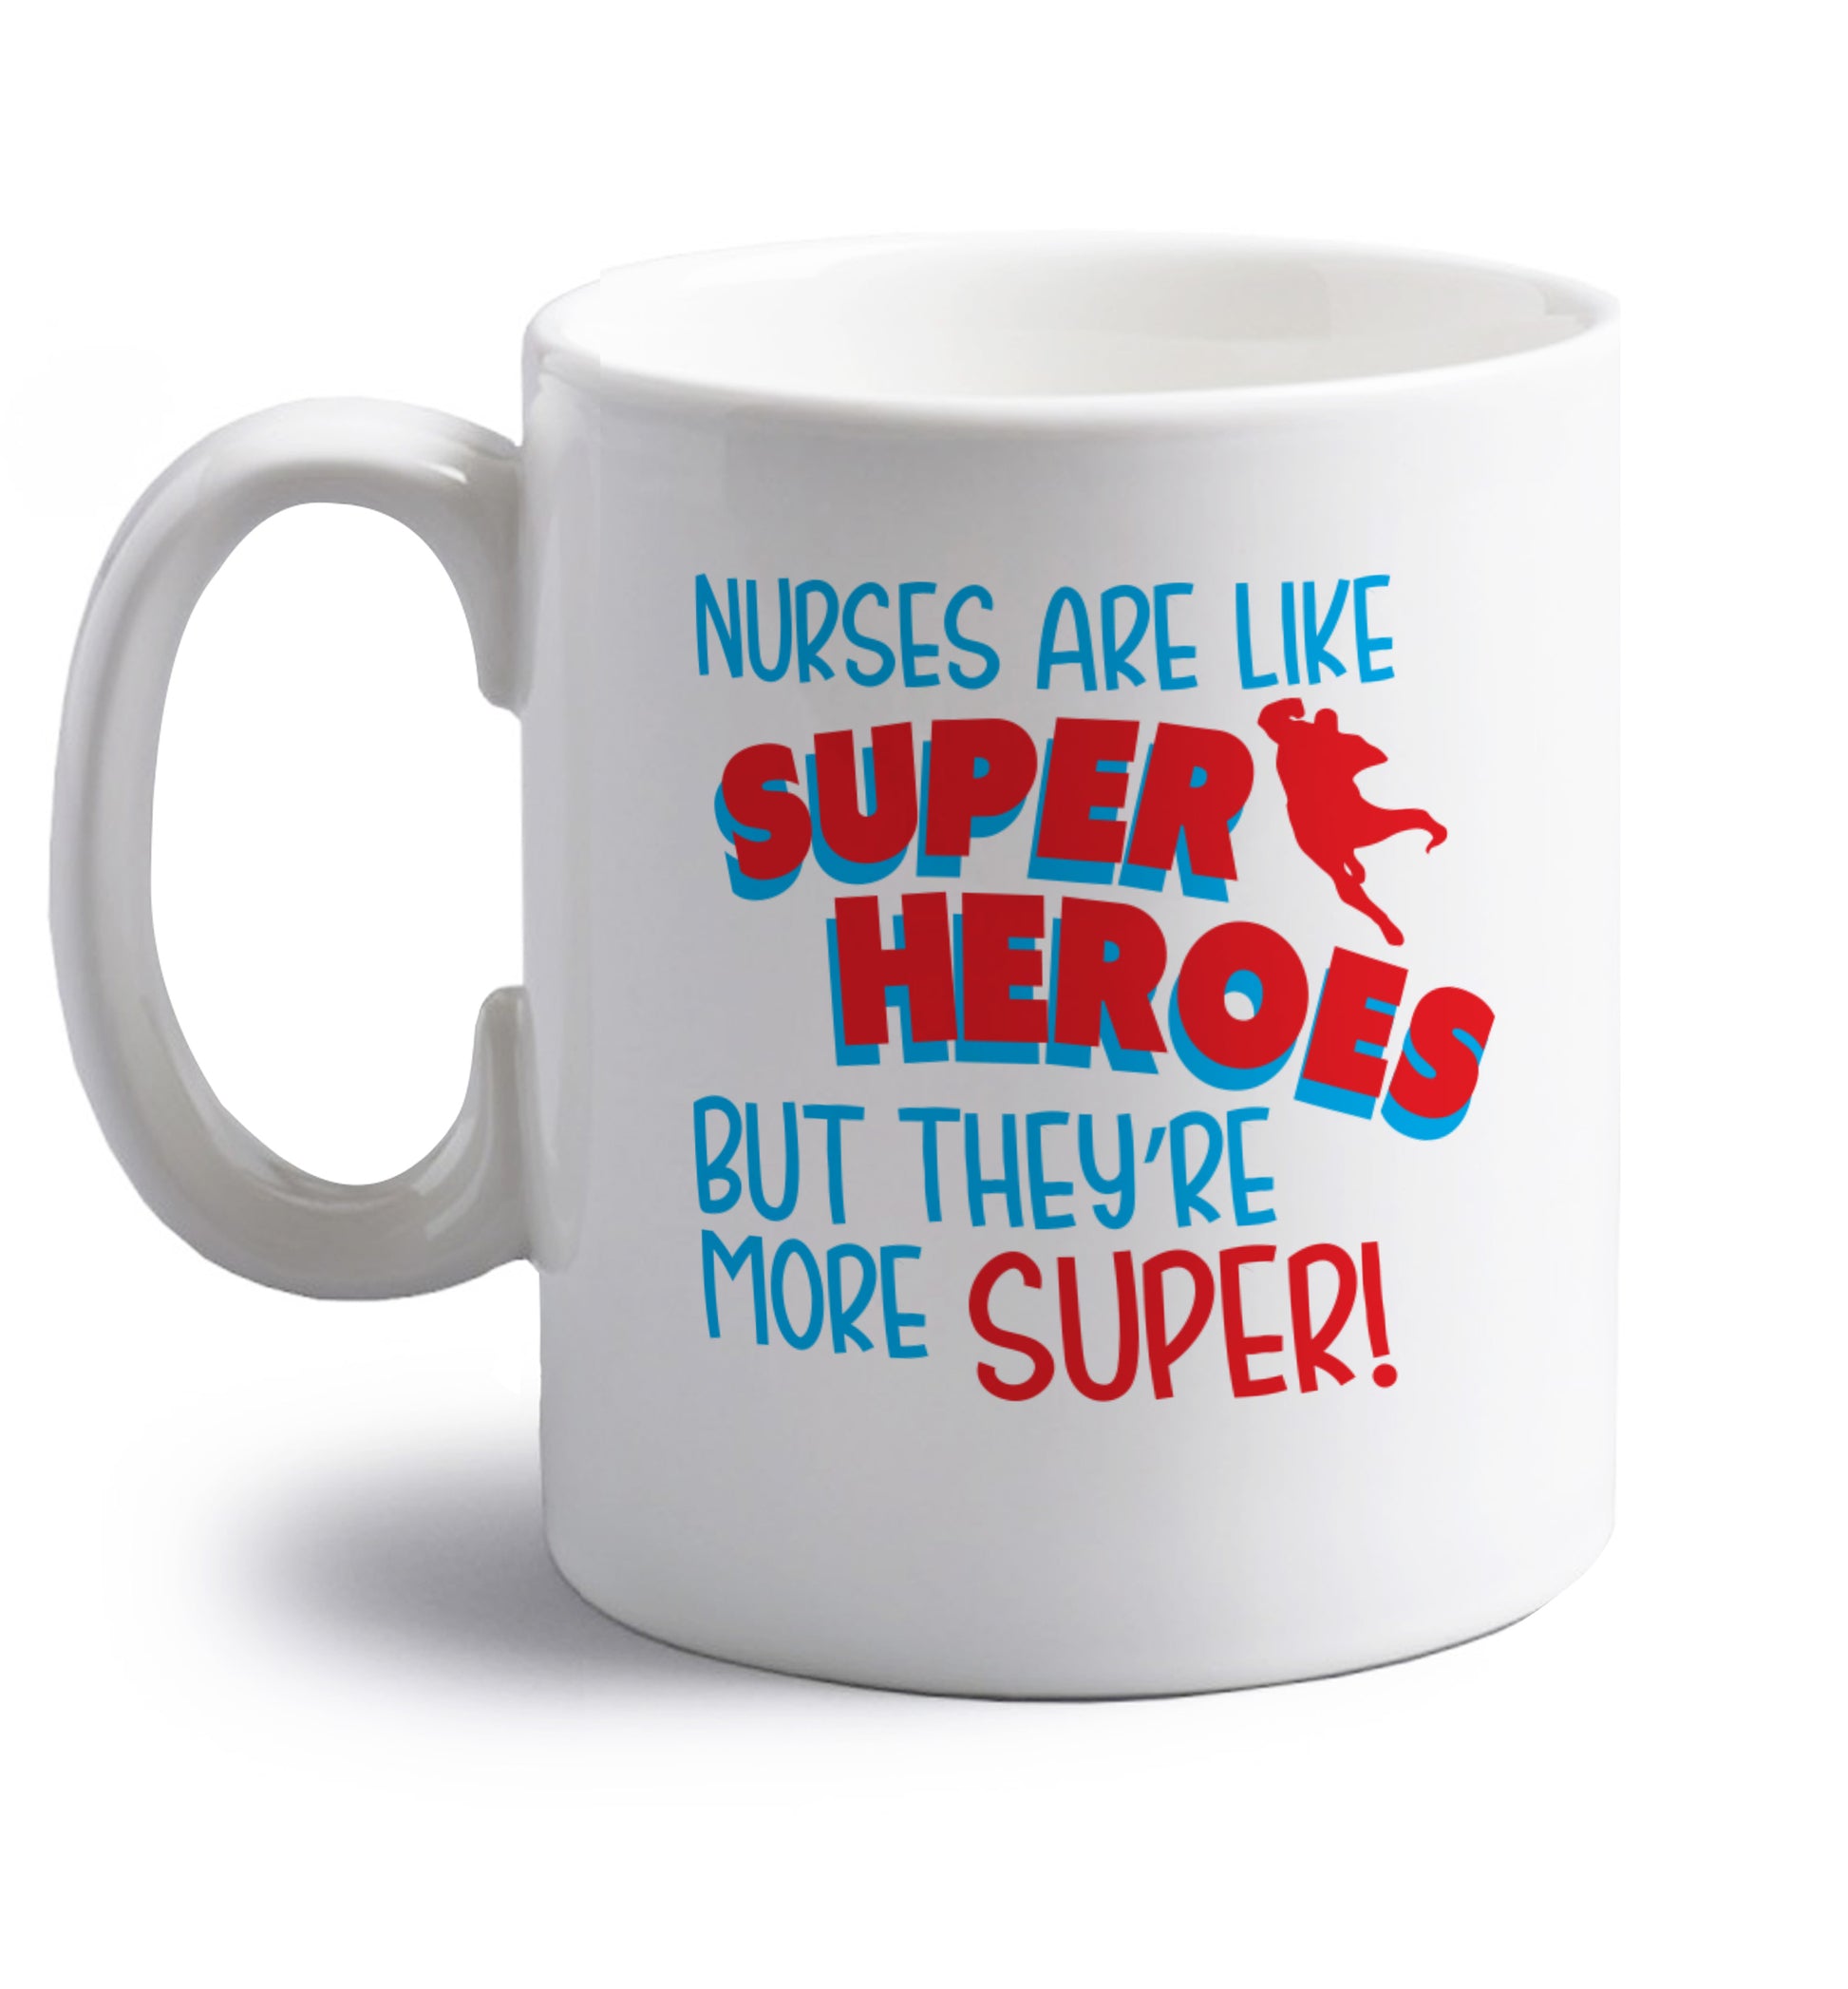 Nurses are like superheros but they're more super right handed white ceramic mug 